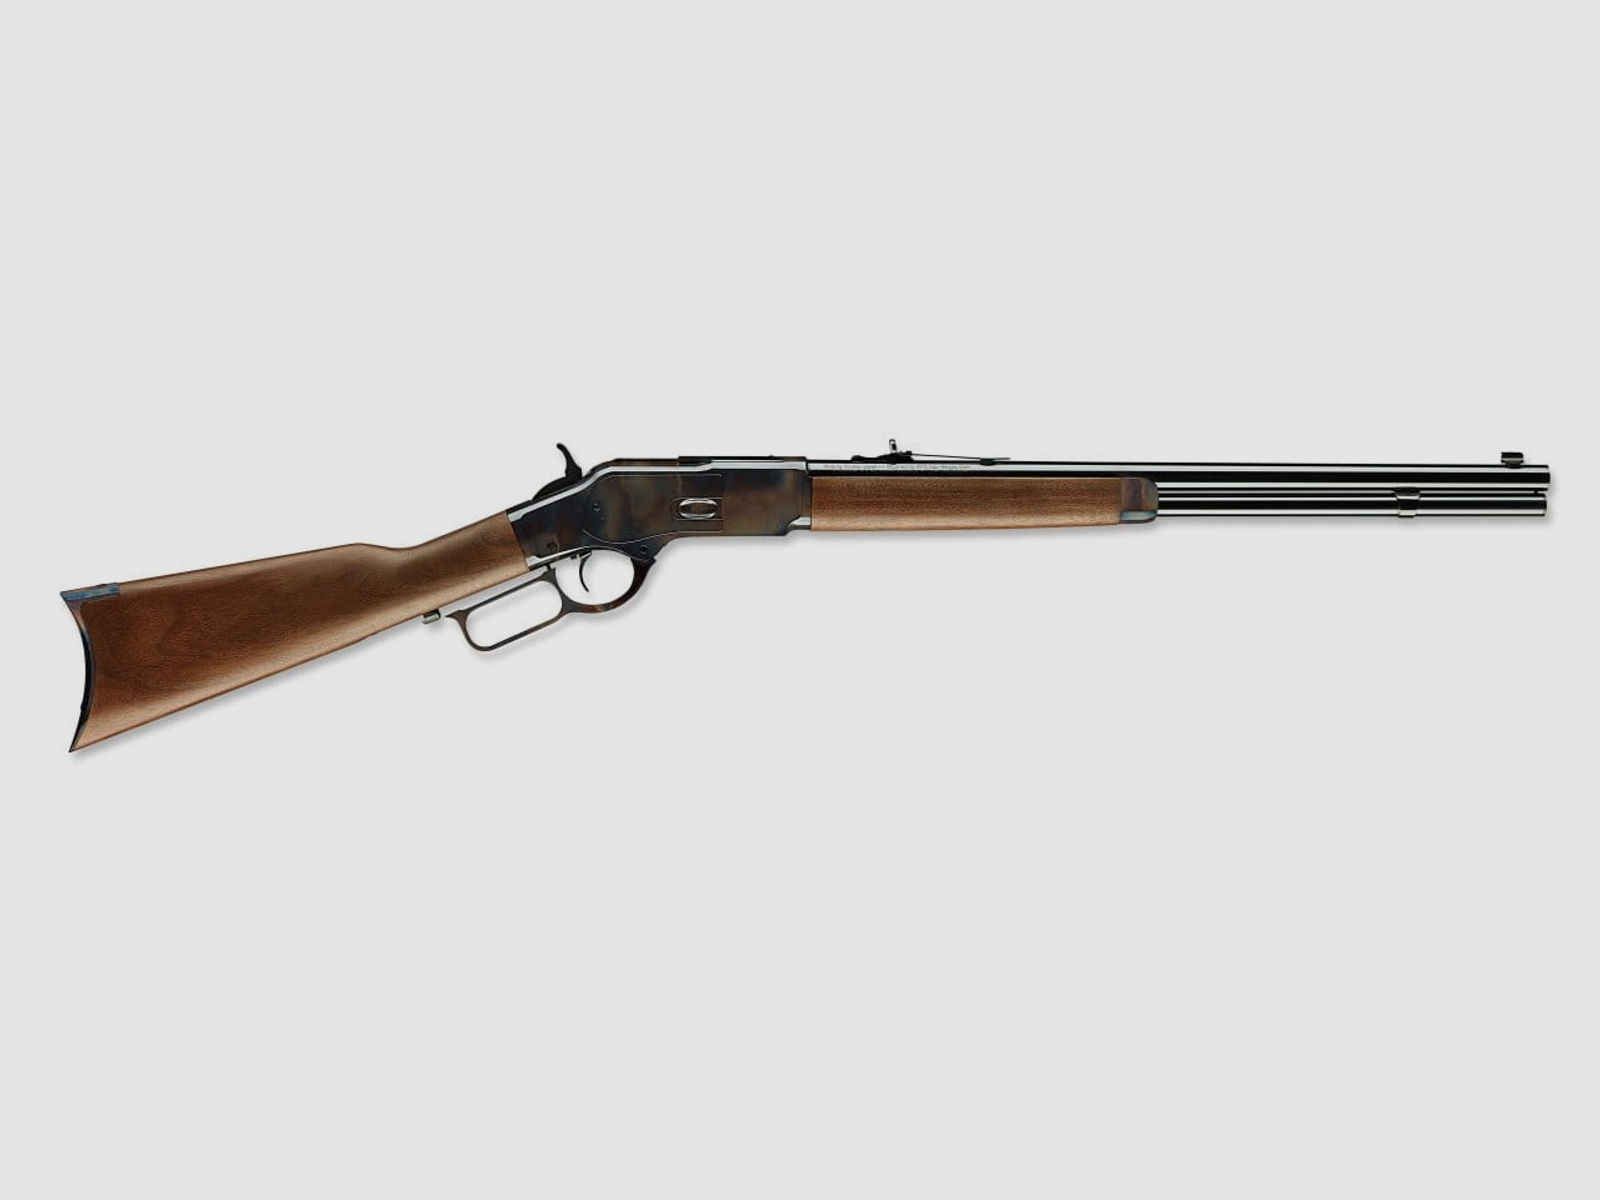 Winchester Mod 1873 Short Rifle Case Hardened Unterhebelrepetierbüchse Kal 44...